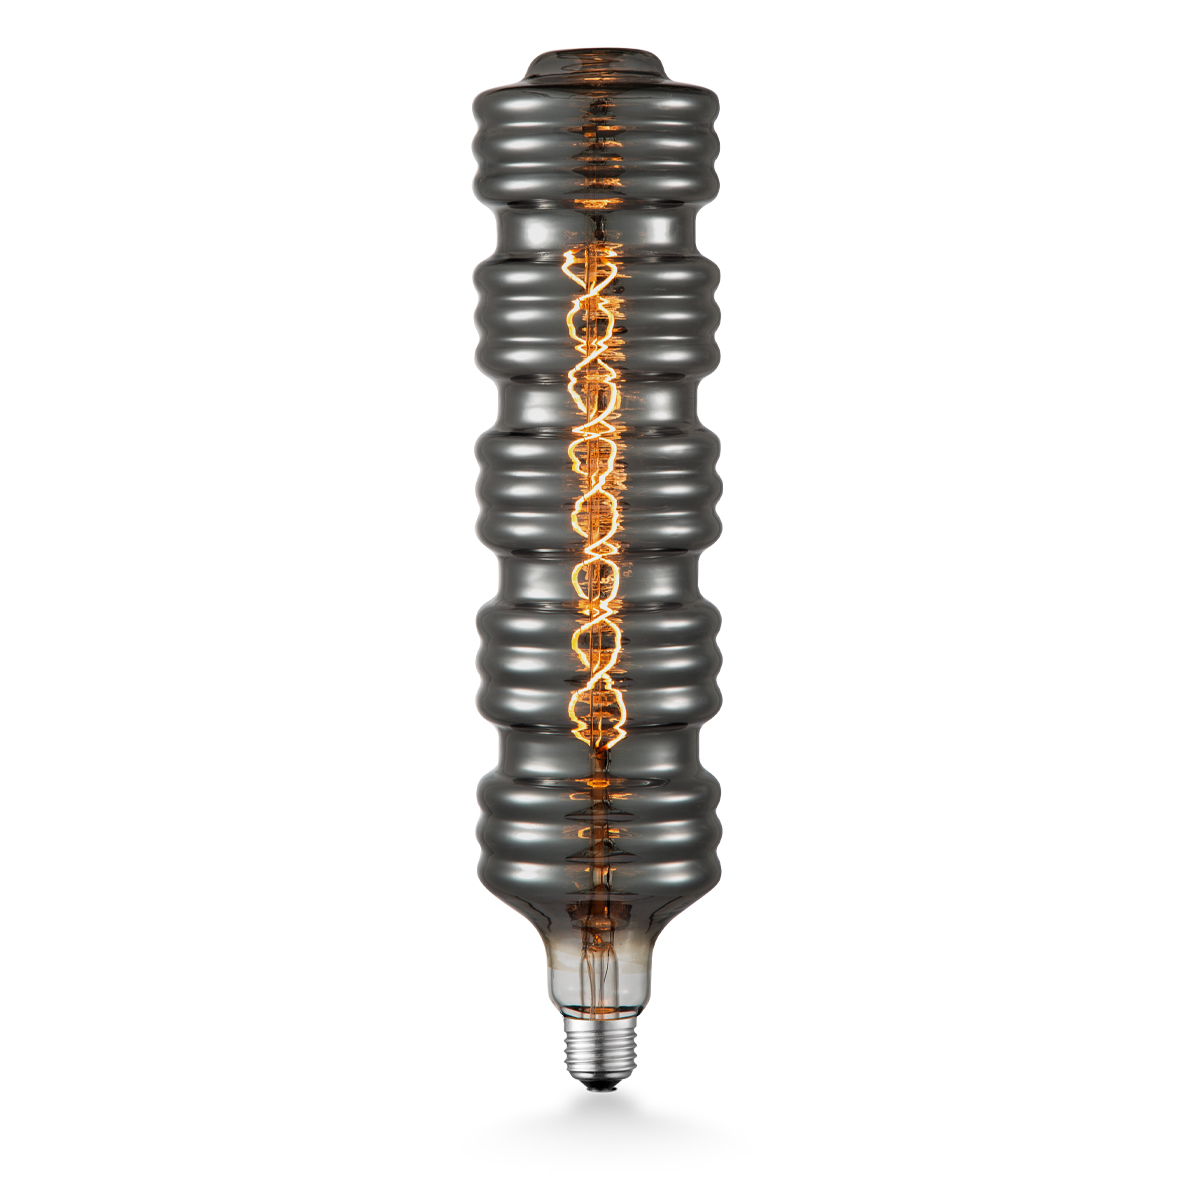 Tangla lighting - TLB-8053-06TM - LED Light Bulb Double Spiral filament - special 4W titanium - medium knots - dimmable - E27